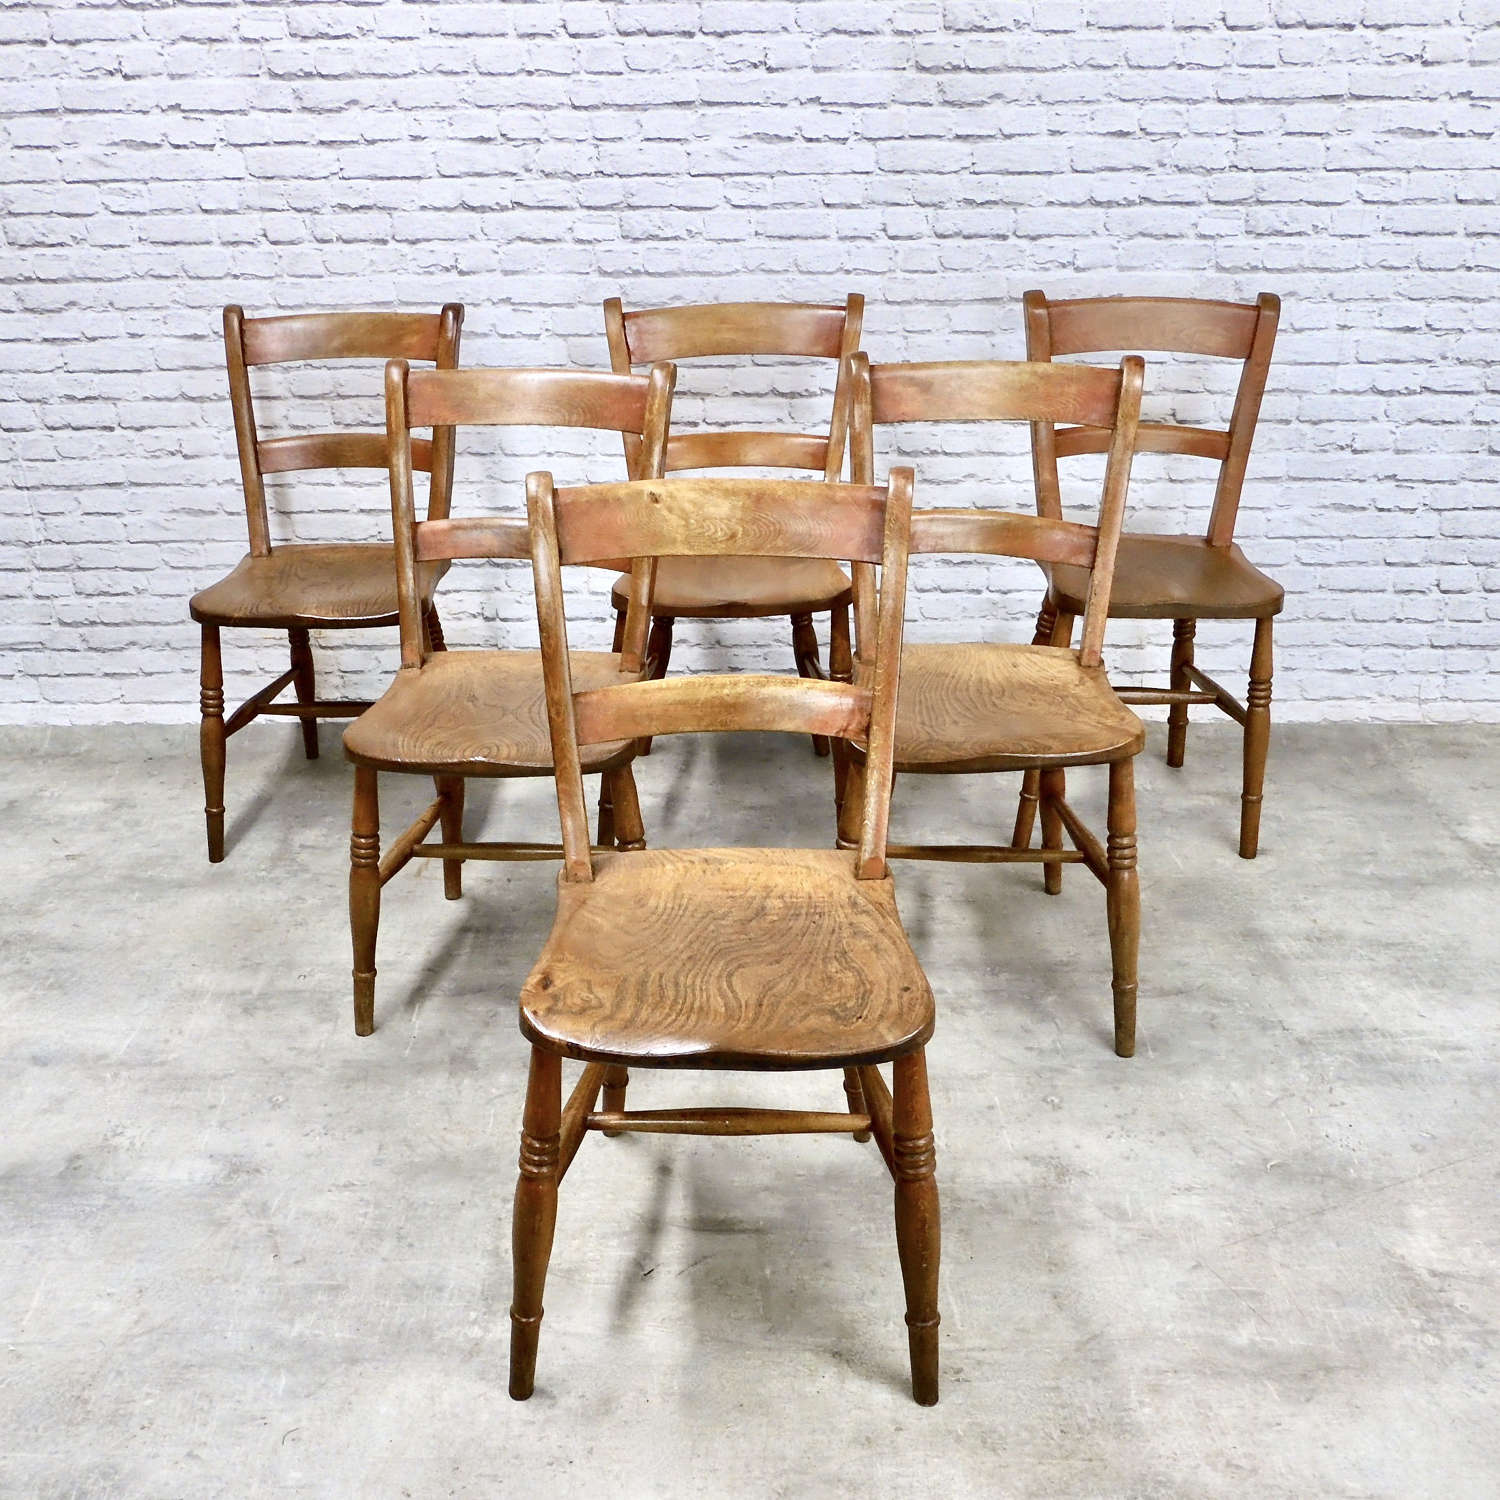 Barback Windsor Kitchen Chairs (6)